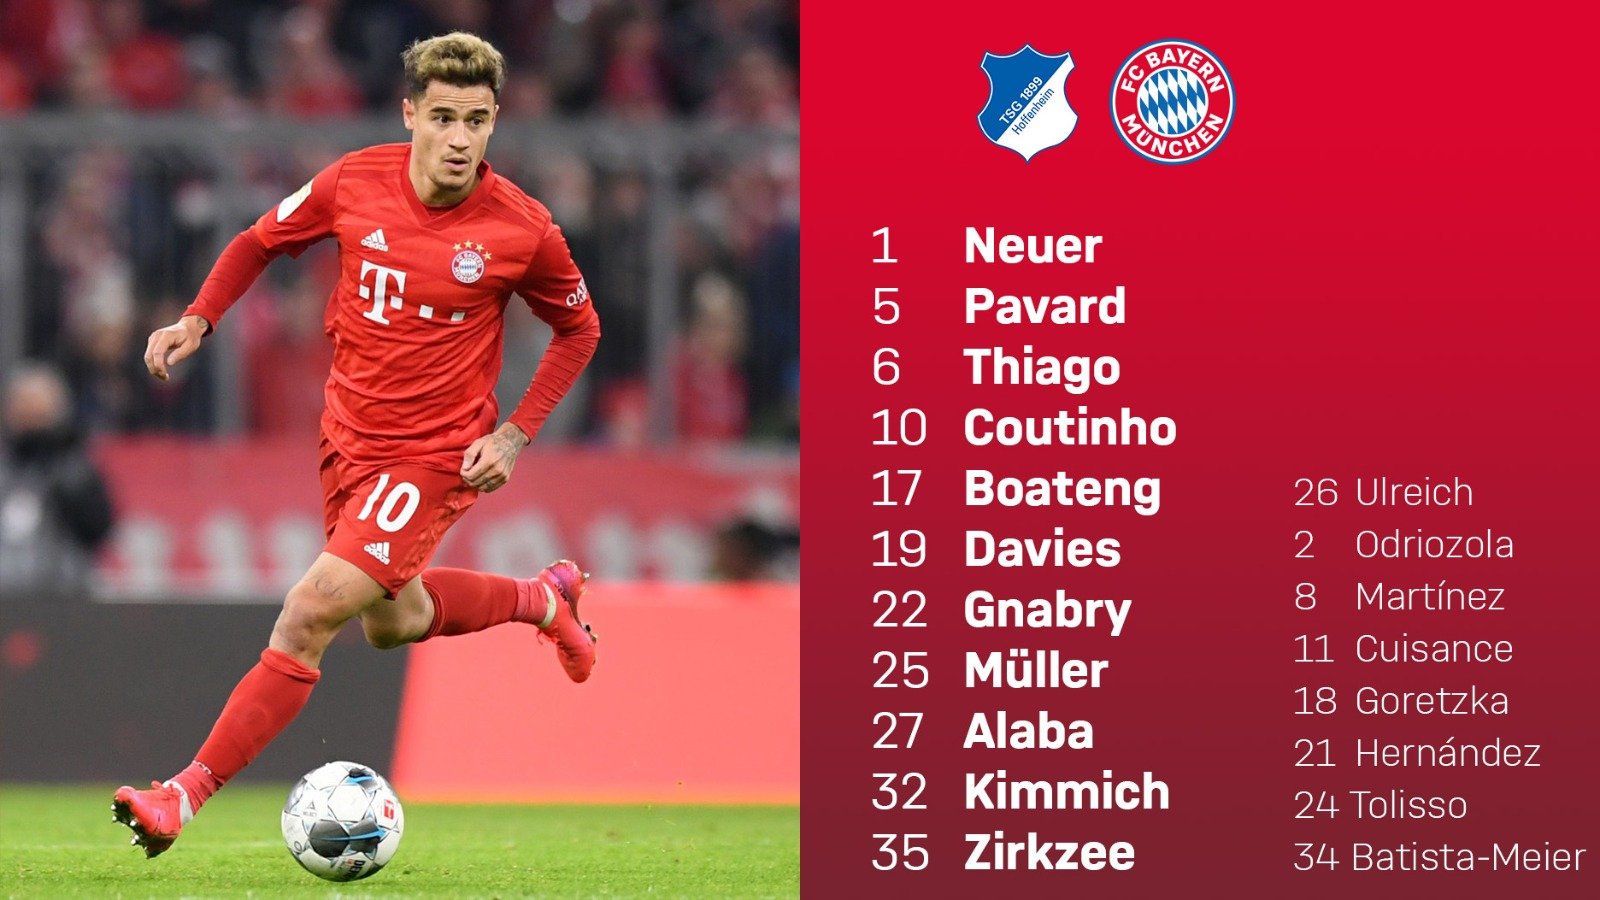 FC Bayern München on X